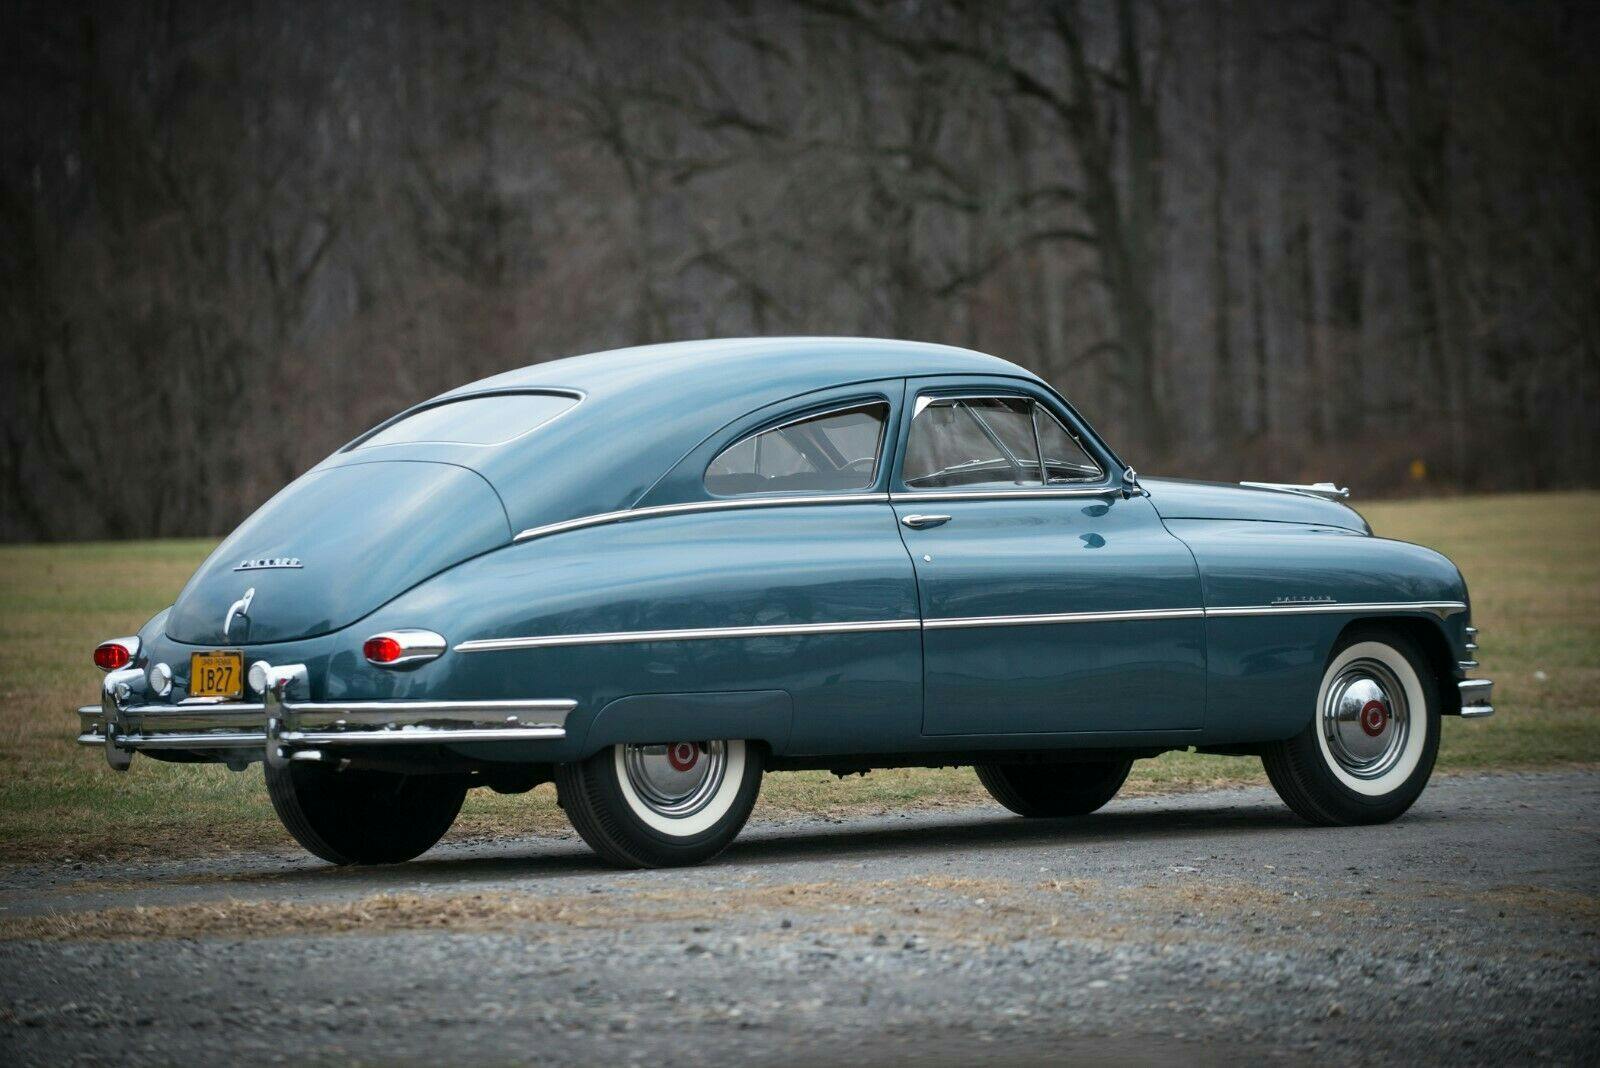 1949 Packard Deluxe Club Sedan - Full Passenger Side - From rear